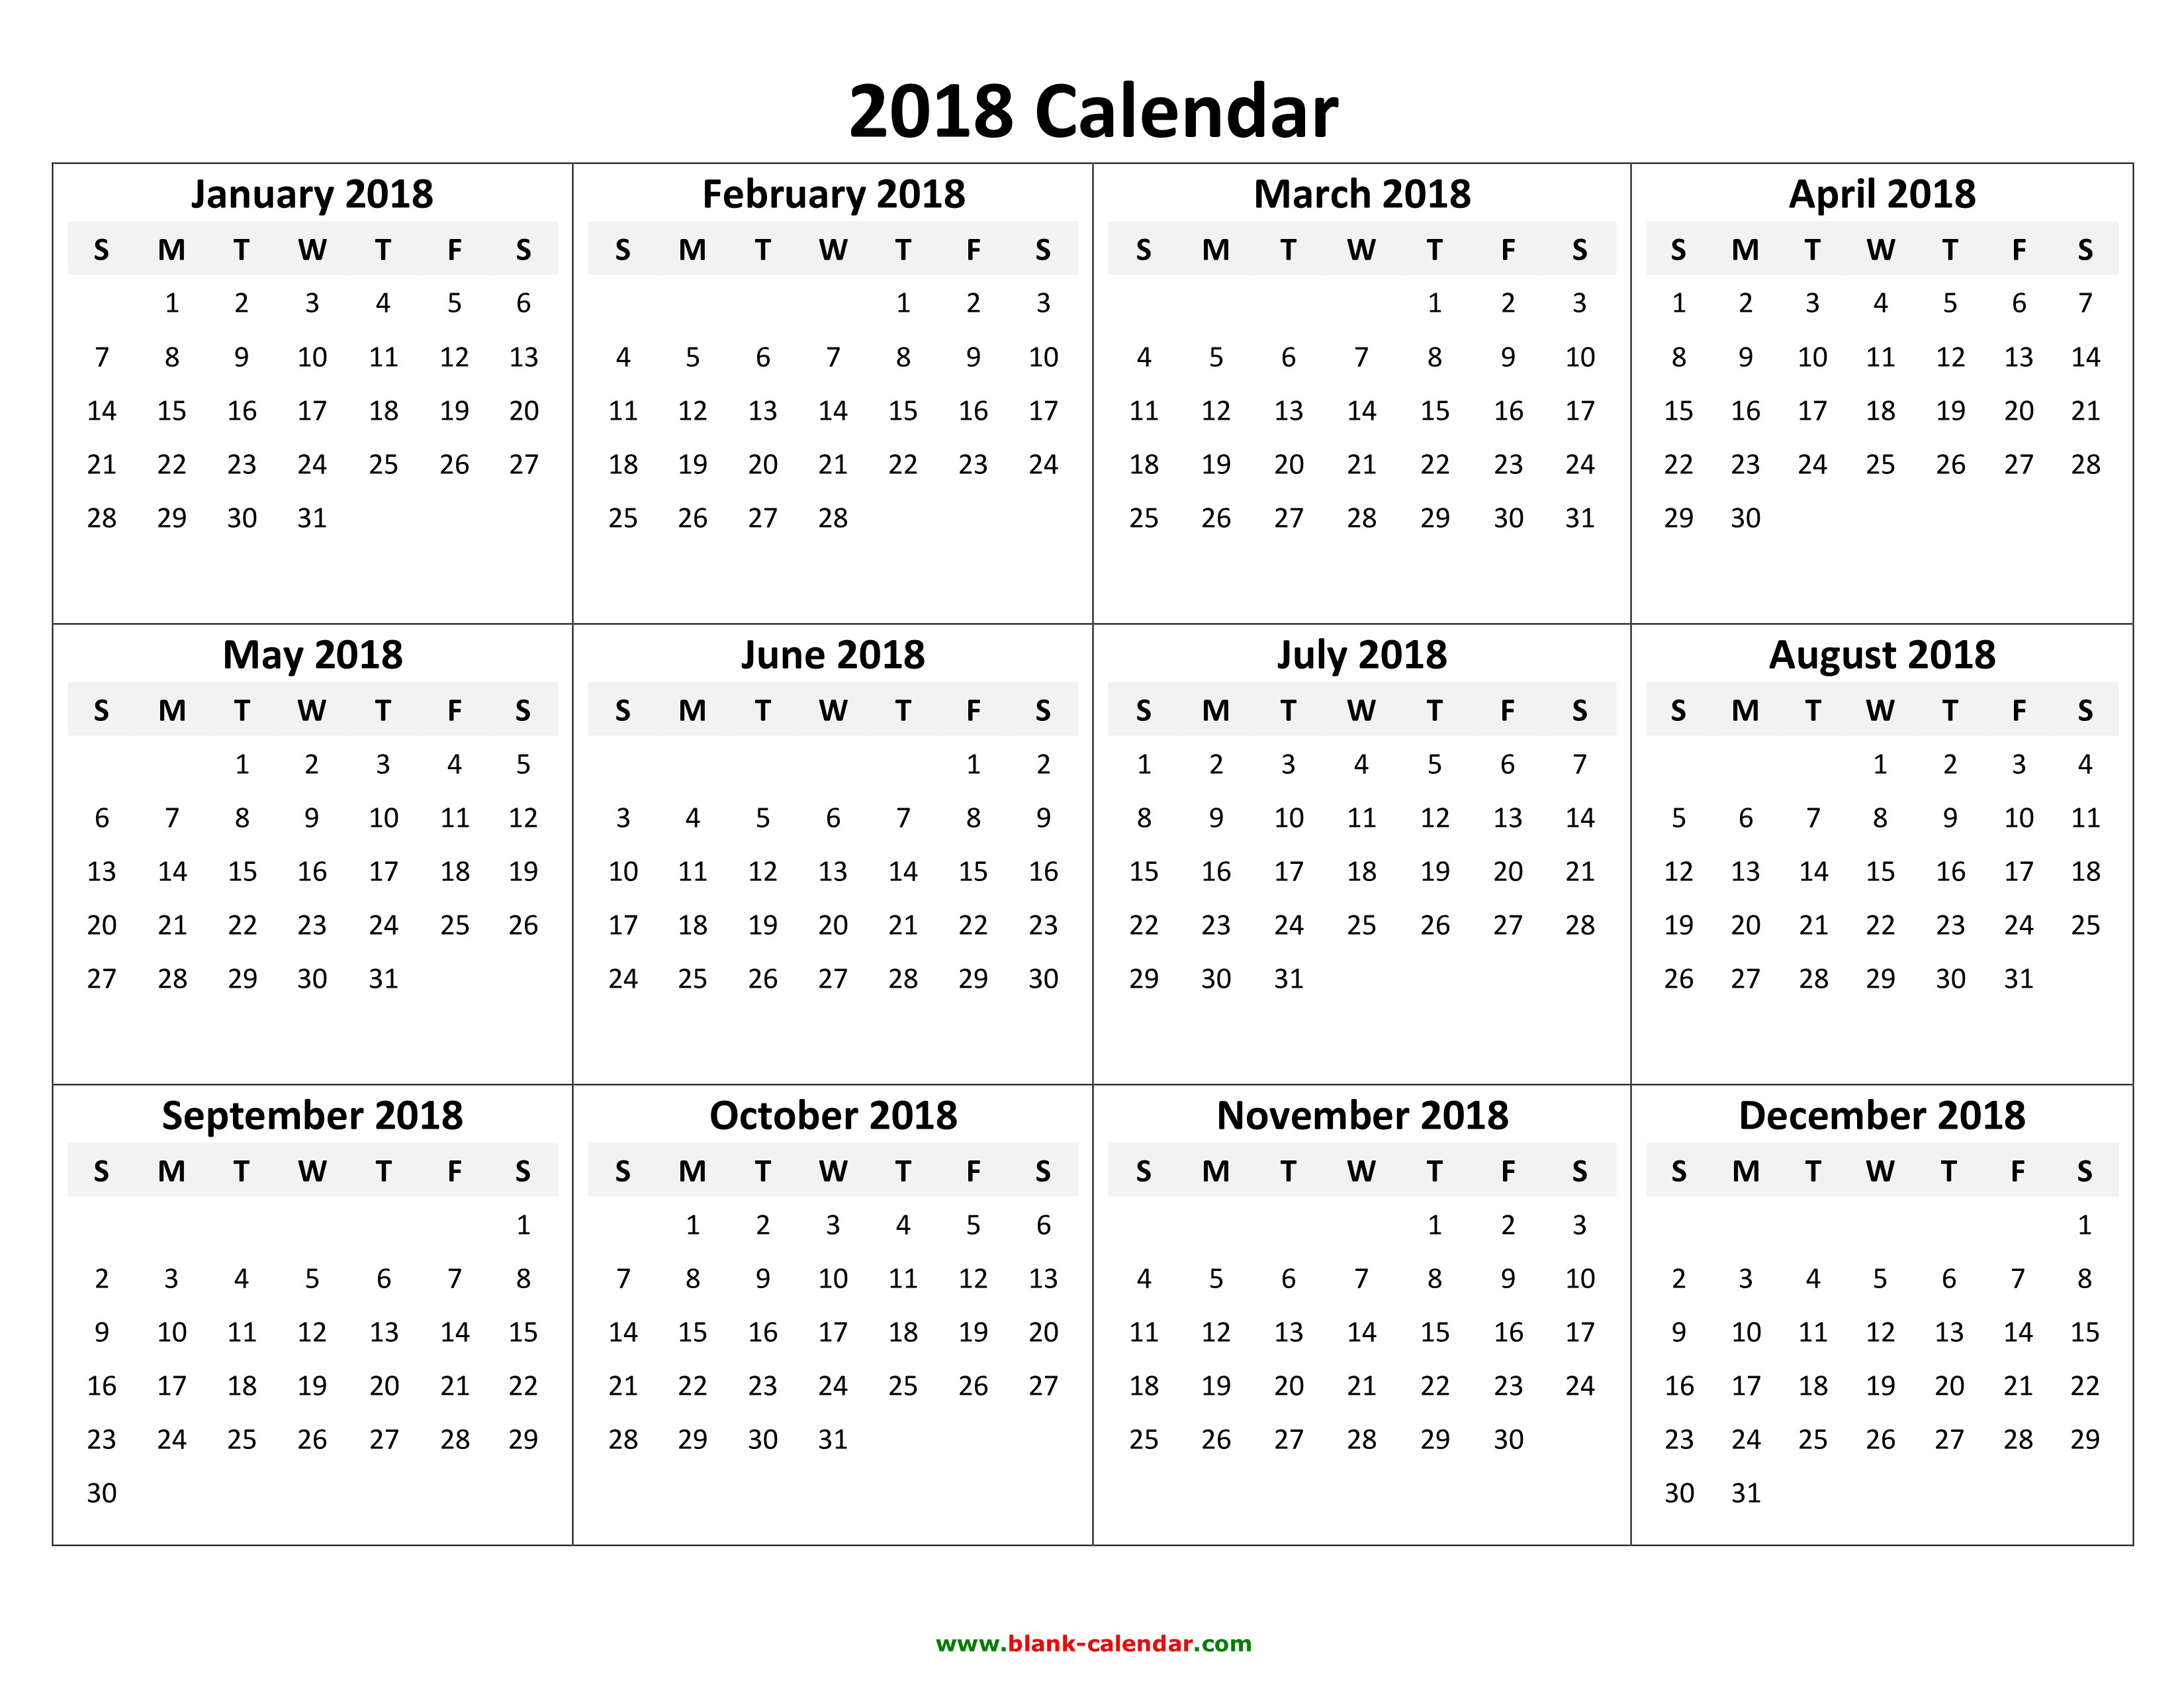 2018 calendar template in microsoft word